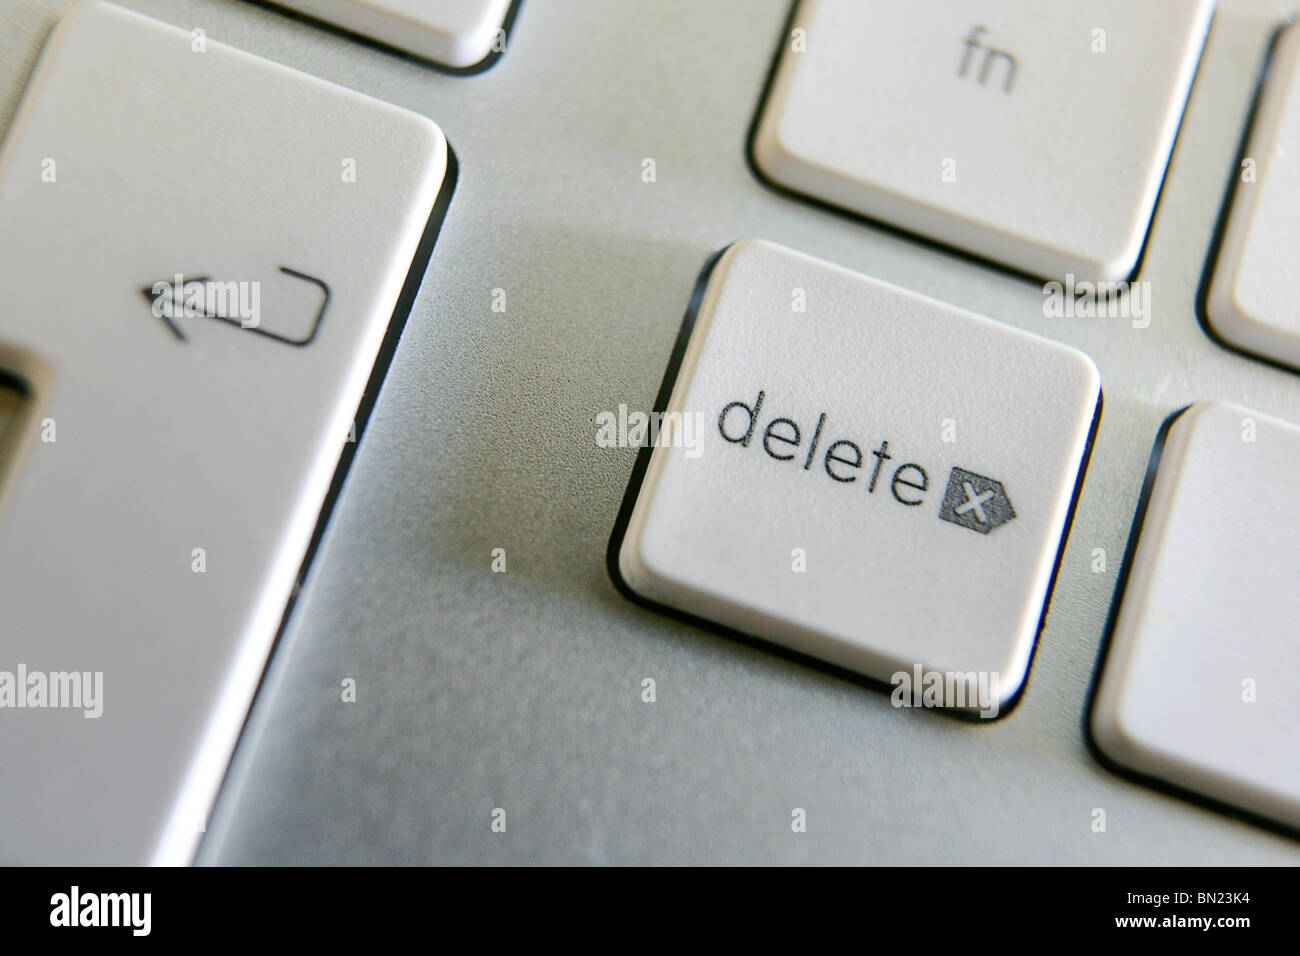 The delete key on an Apple Mac keyboard Stock Photo